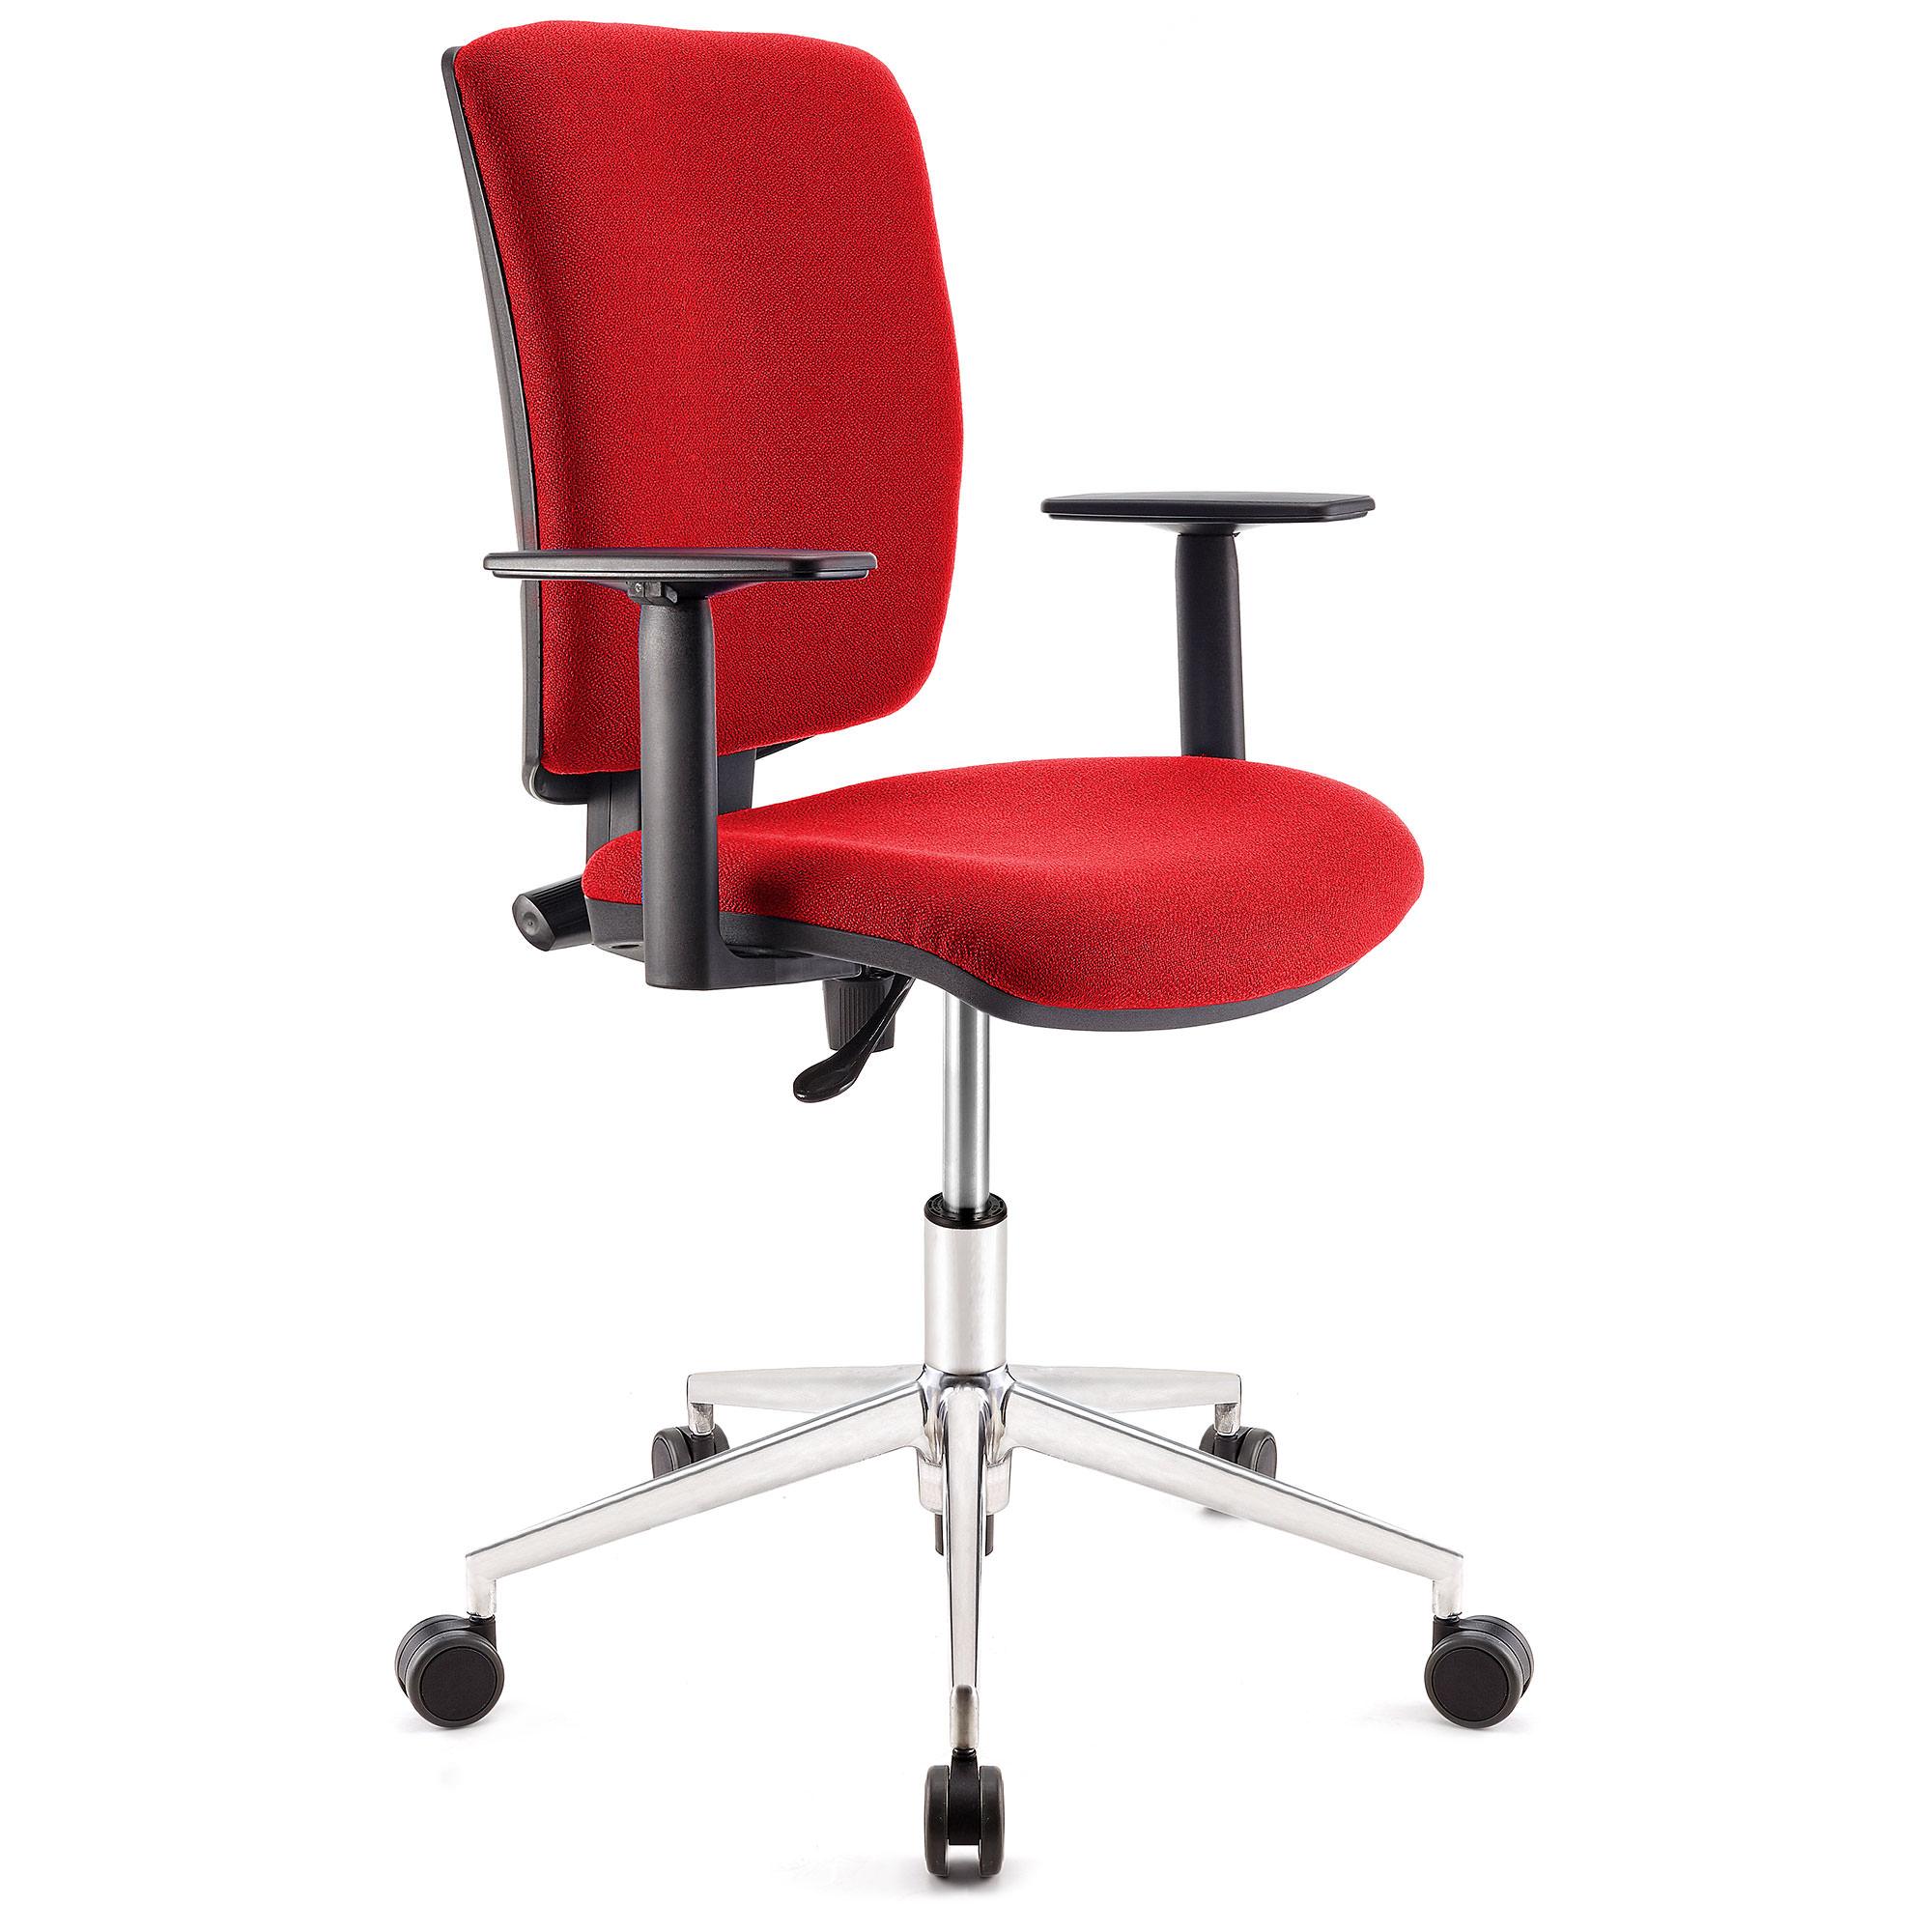 Bürostuhl ATLAS PRO STOFF, verstellbare Rücken- und Armlehnen, Metallfußkreuz, Farbe Rot